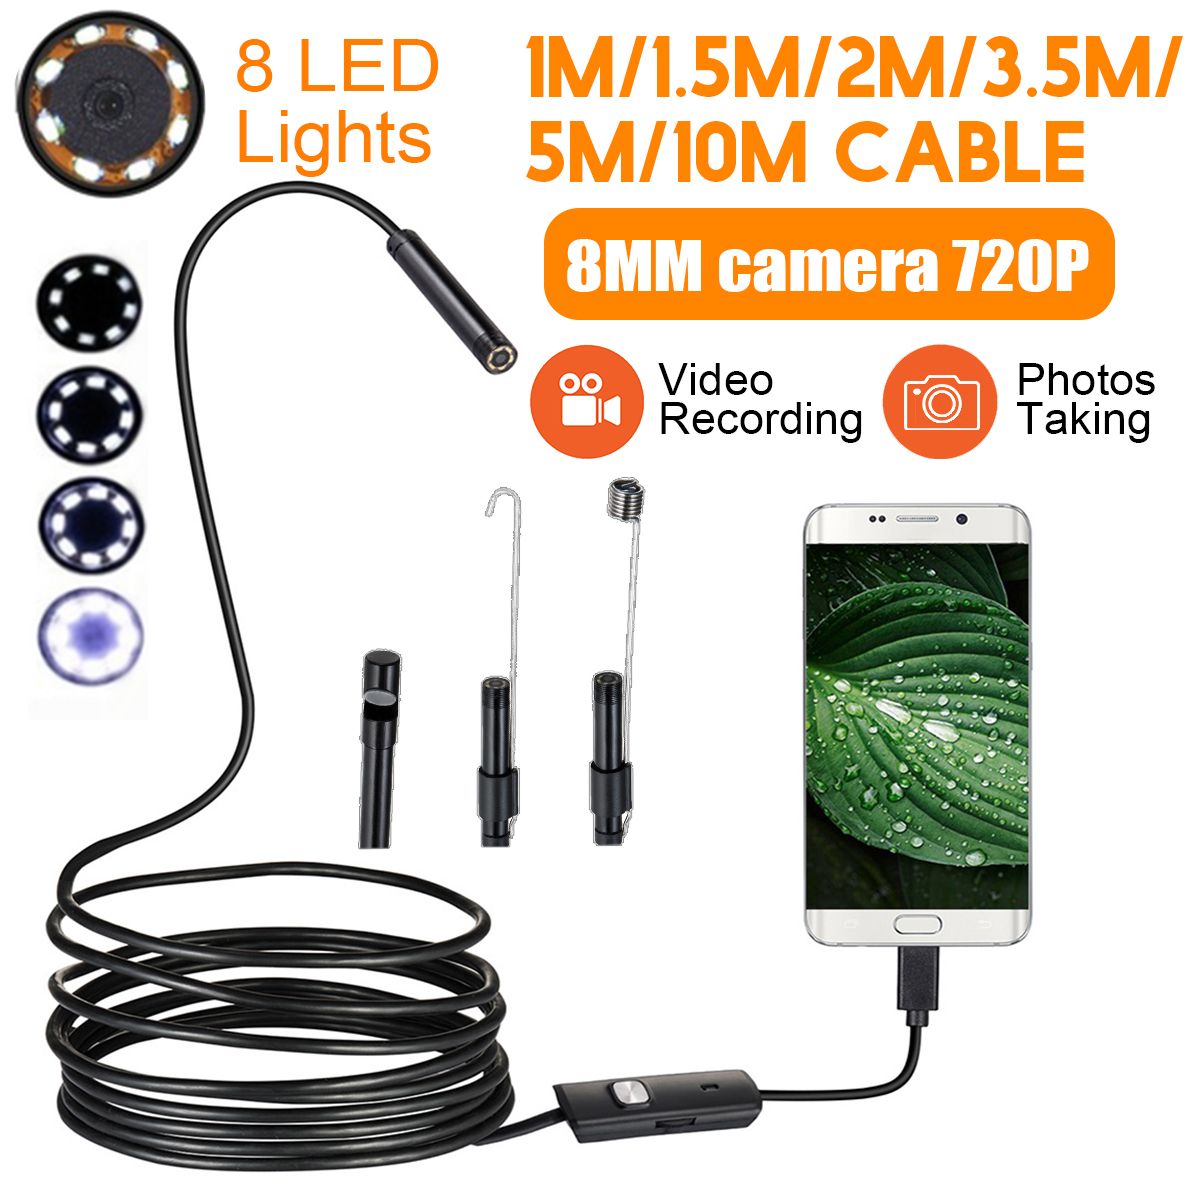 8mm-USB-Mobile-Phone-Borescope-Inspection-Tube-Camera-8LEDs-Waterproof-1618224